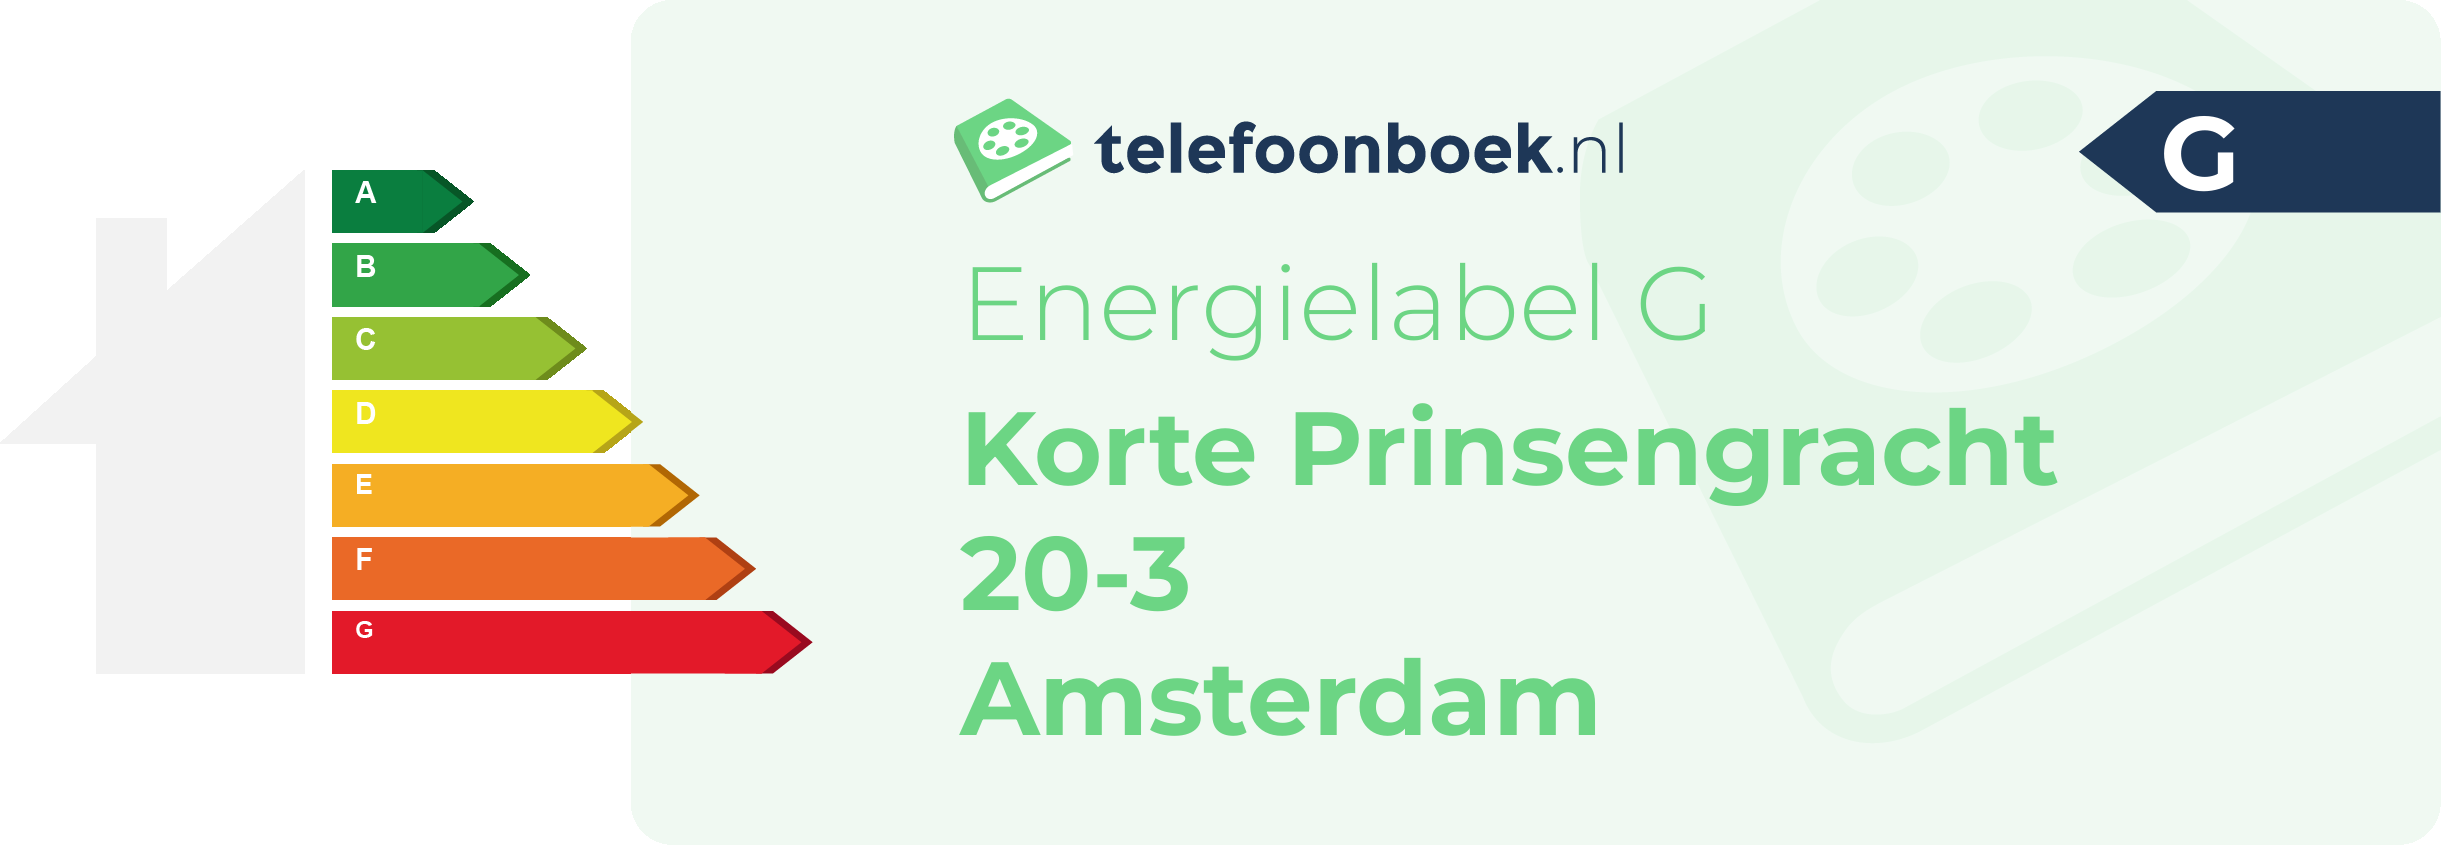 Energielabel Korte Prinsengracht 20-3 Amsterdam